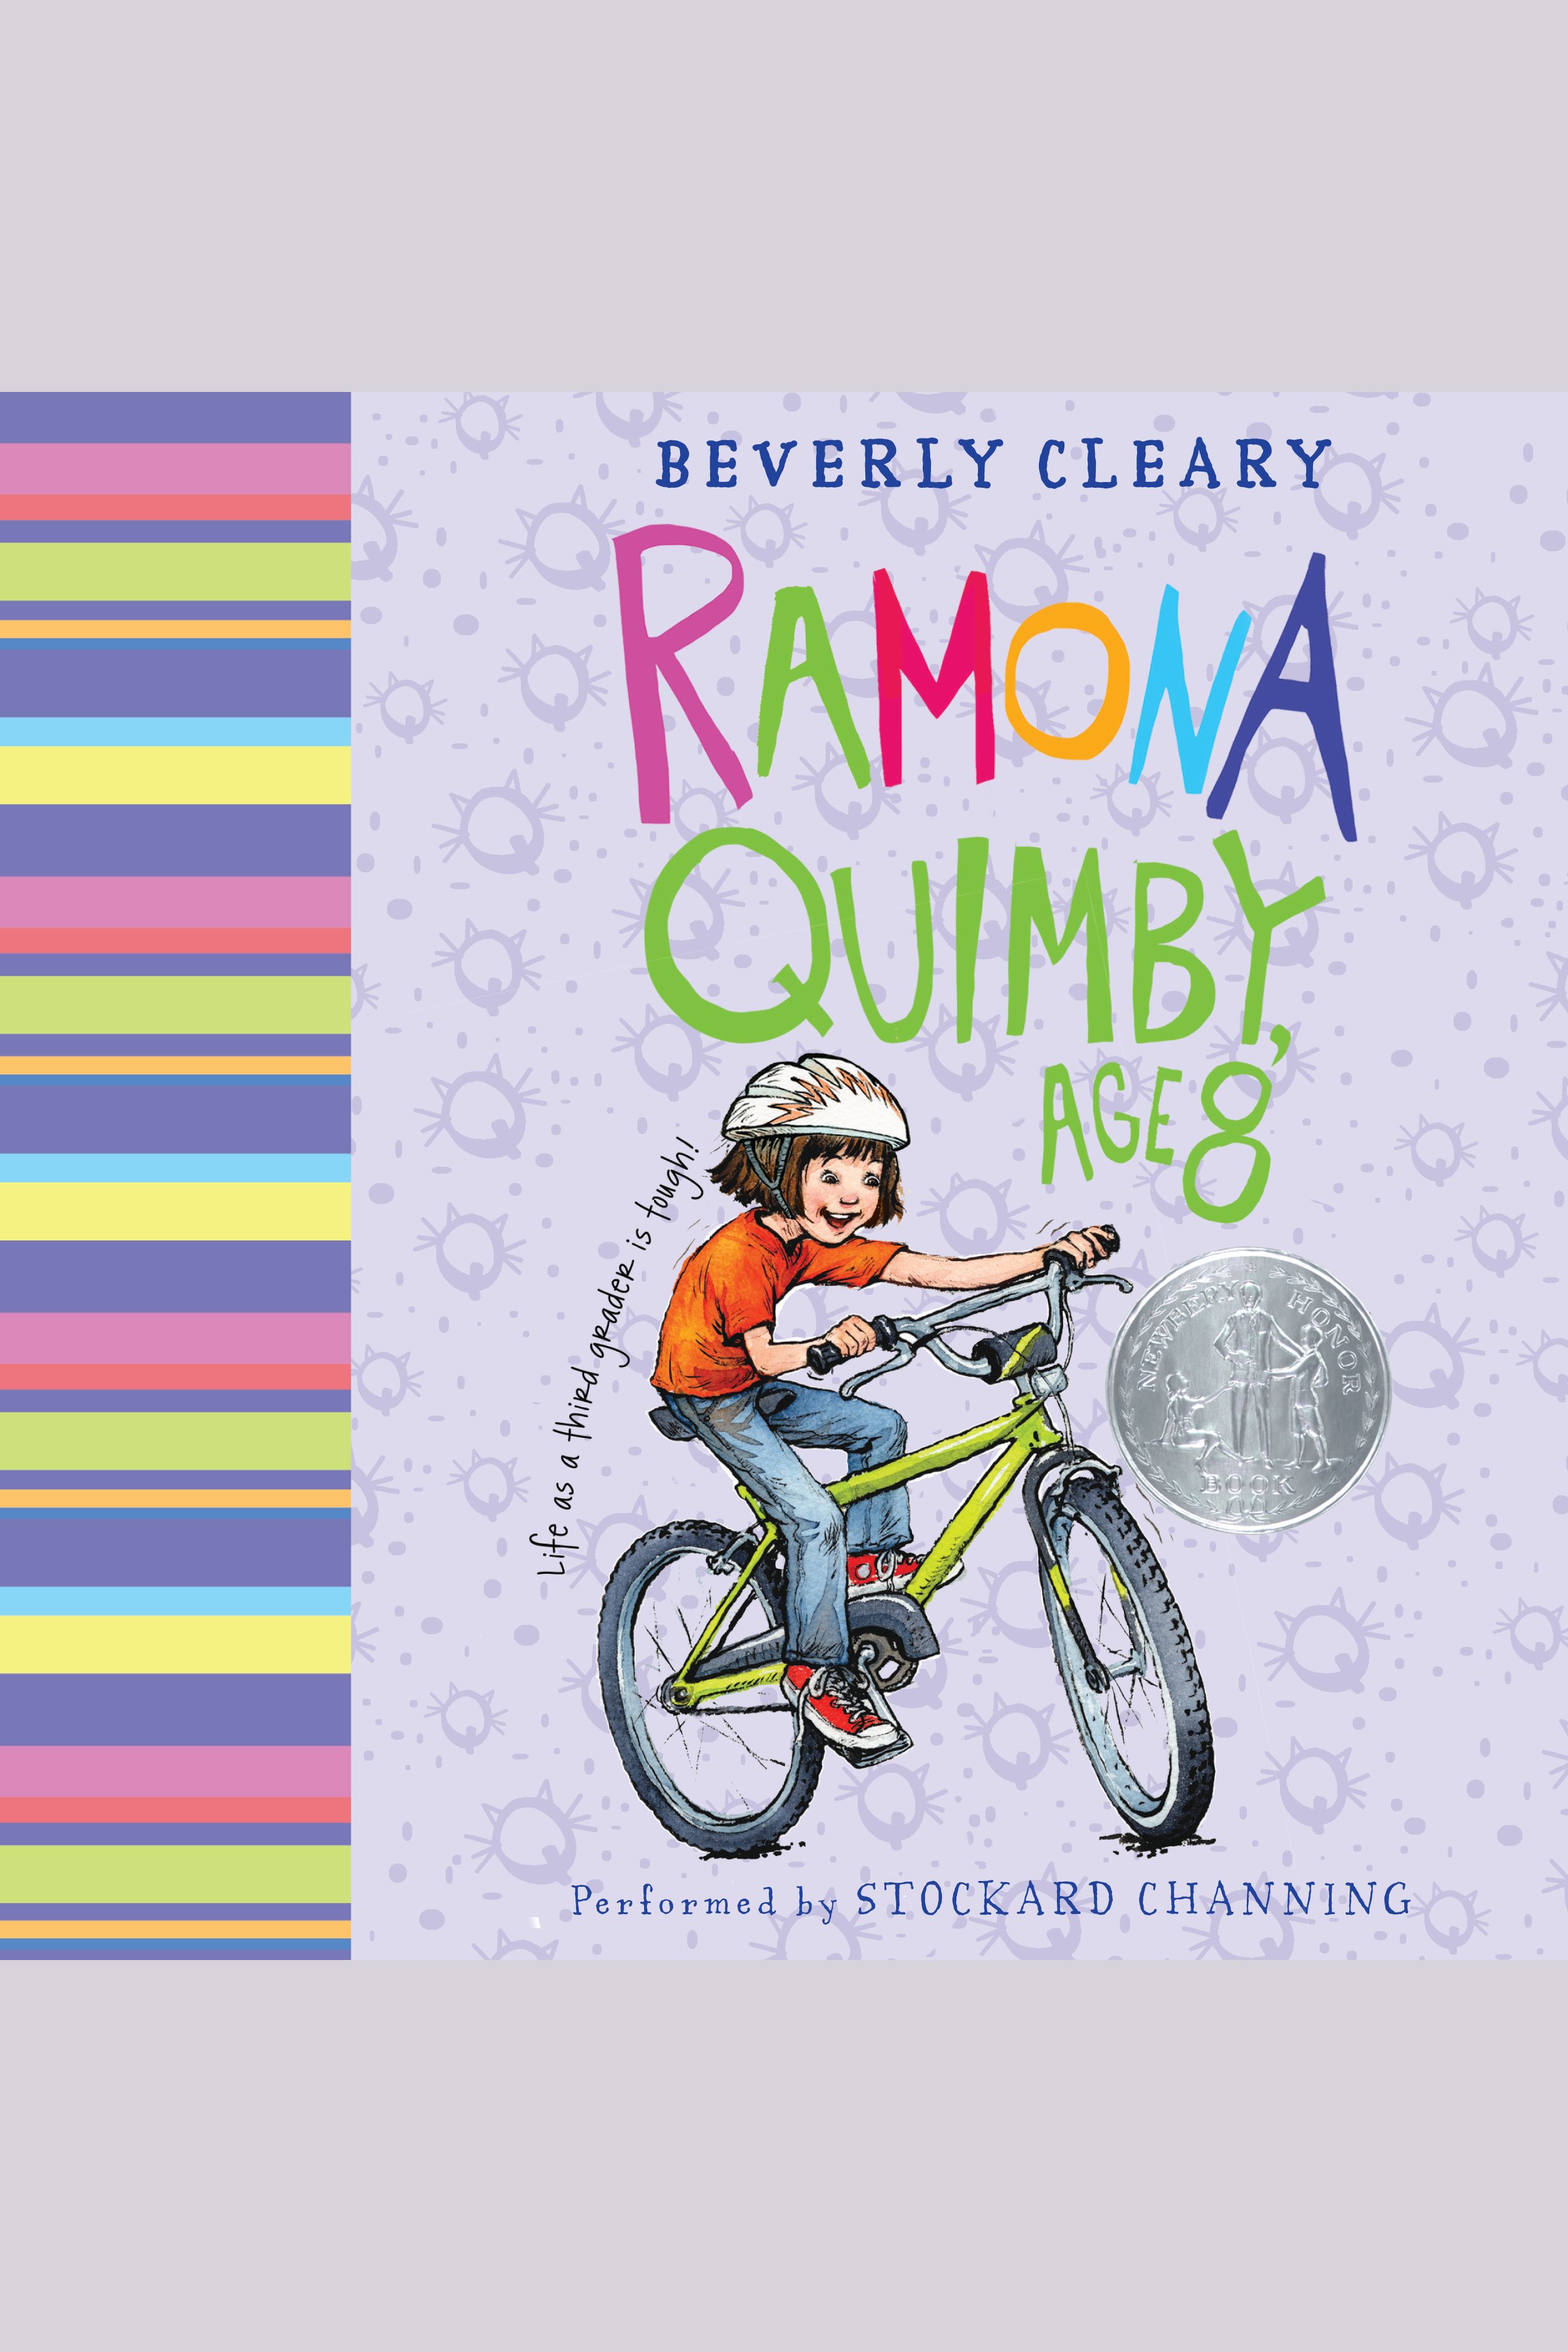 Ramona Quimby, age 8 cover image